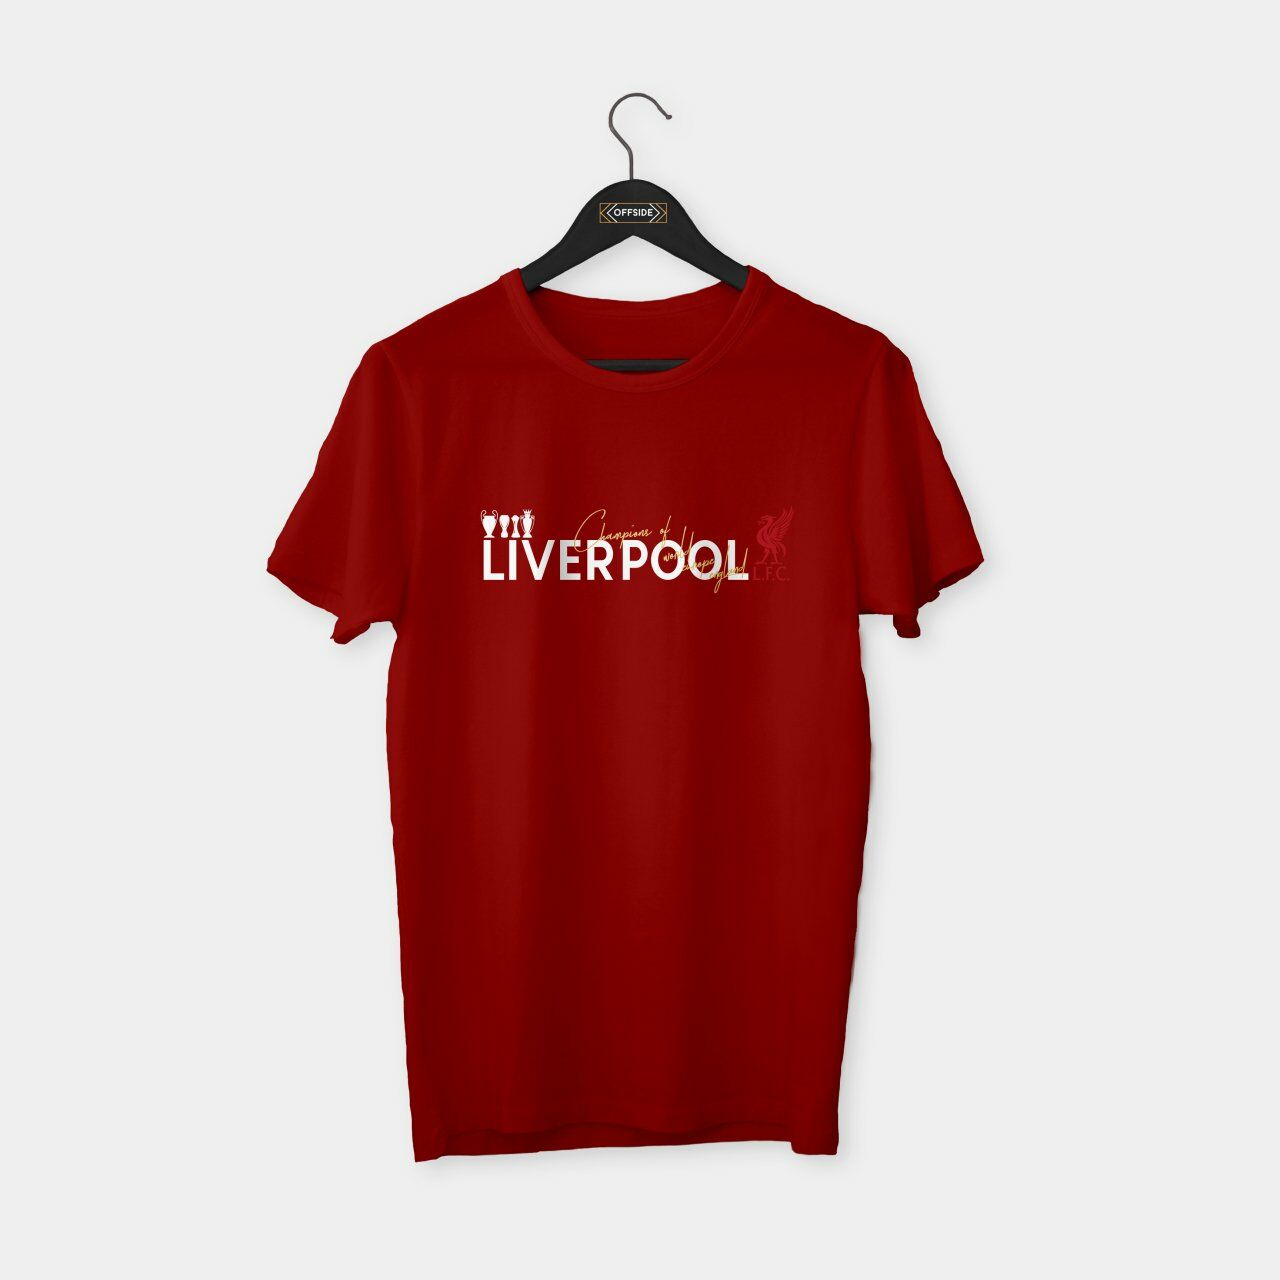 YNWA - Liverpool 'Champions of europe' T-shirt